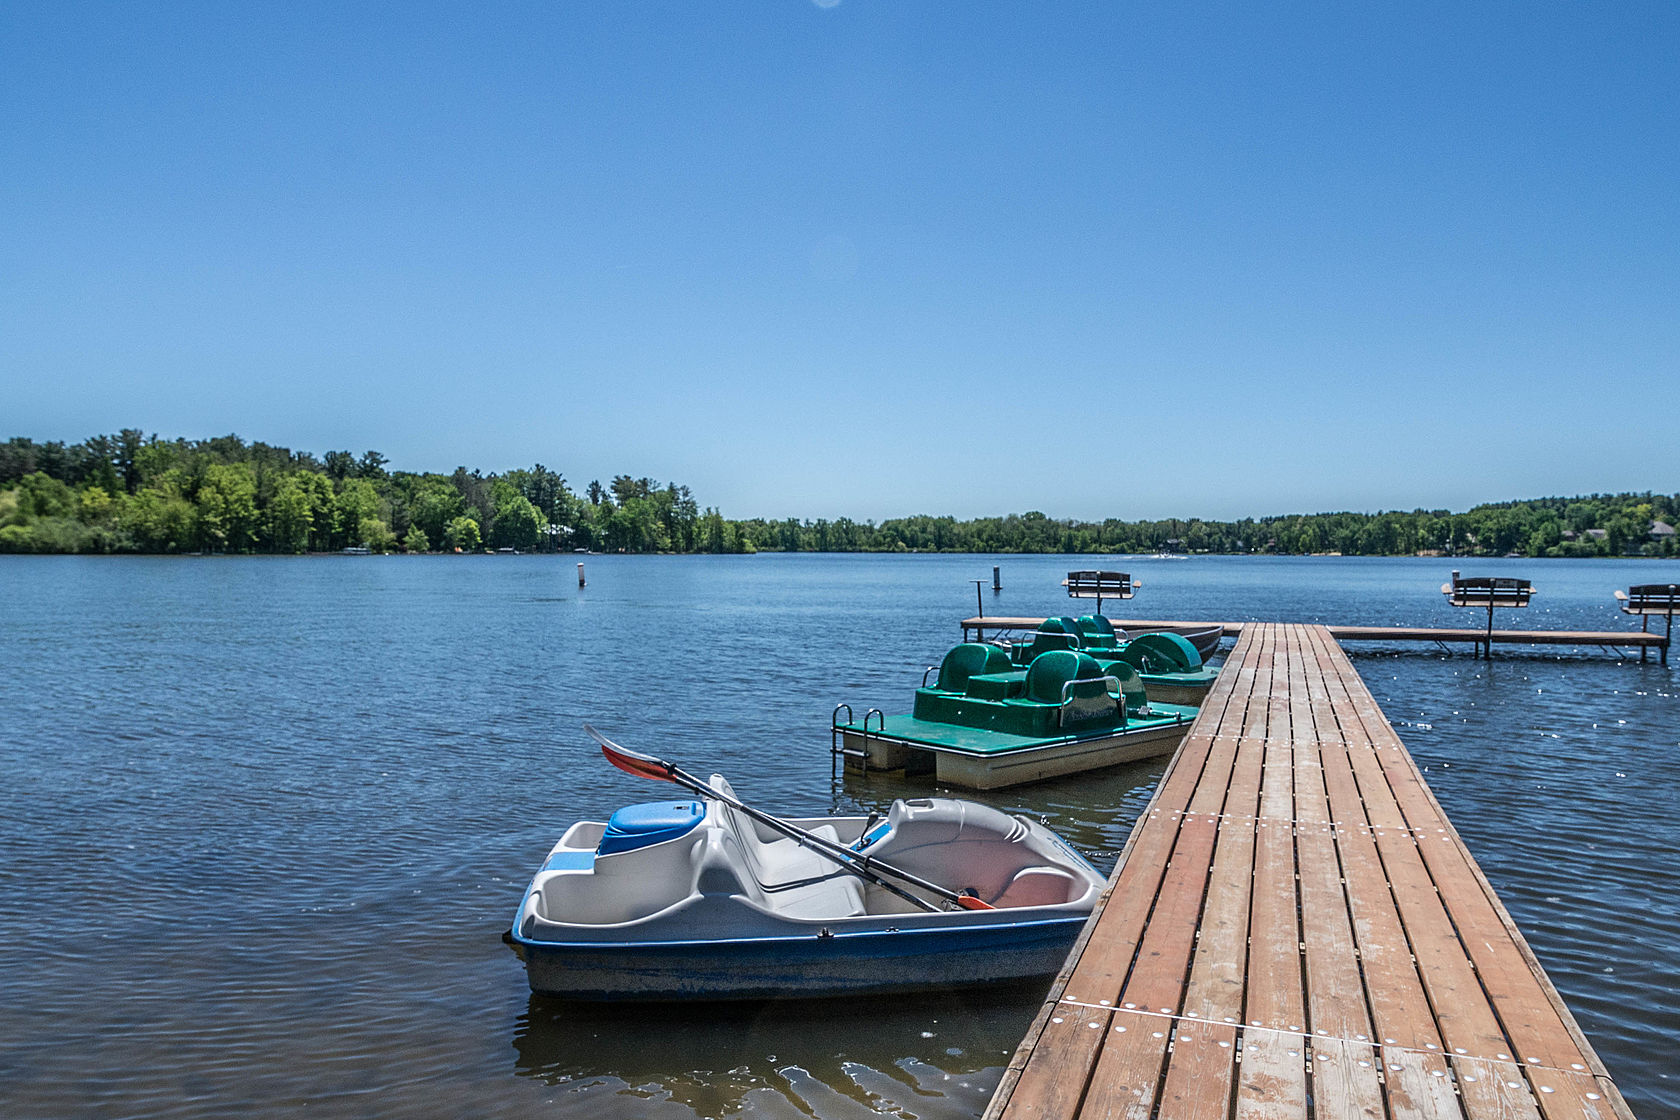 Pine Creek residents enjoy lake docks and boating access